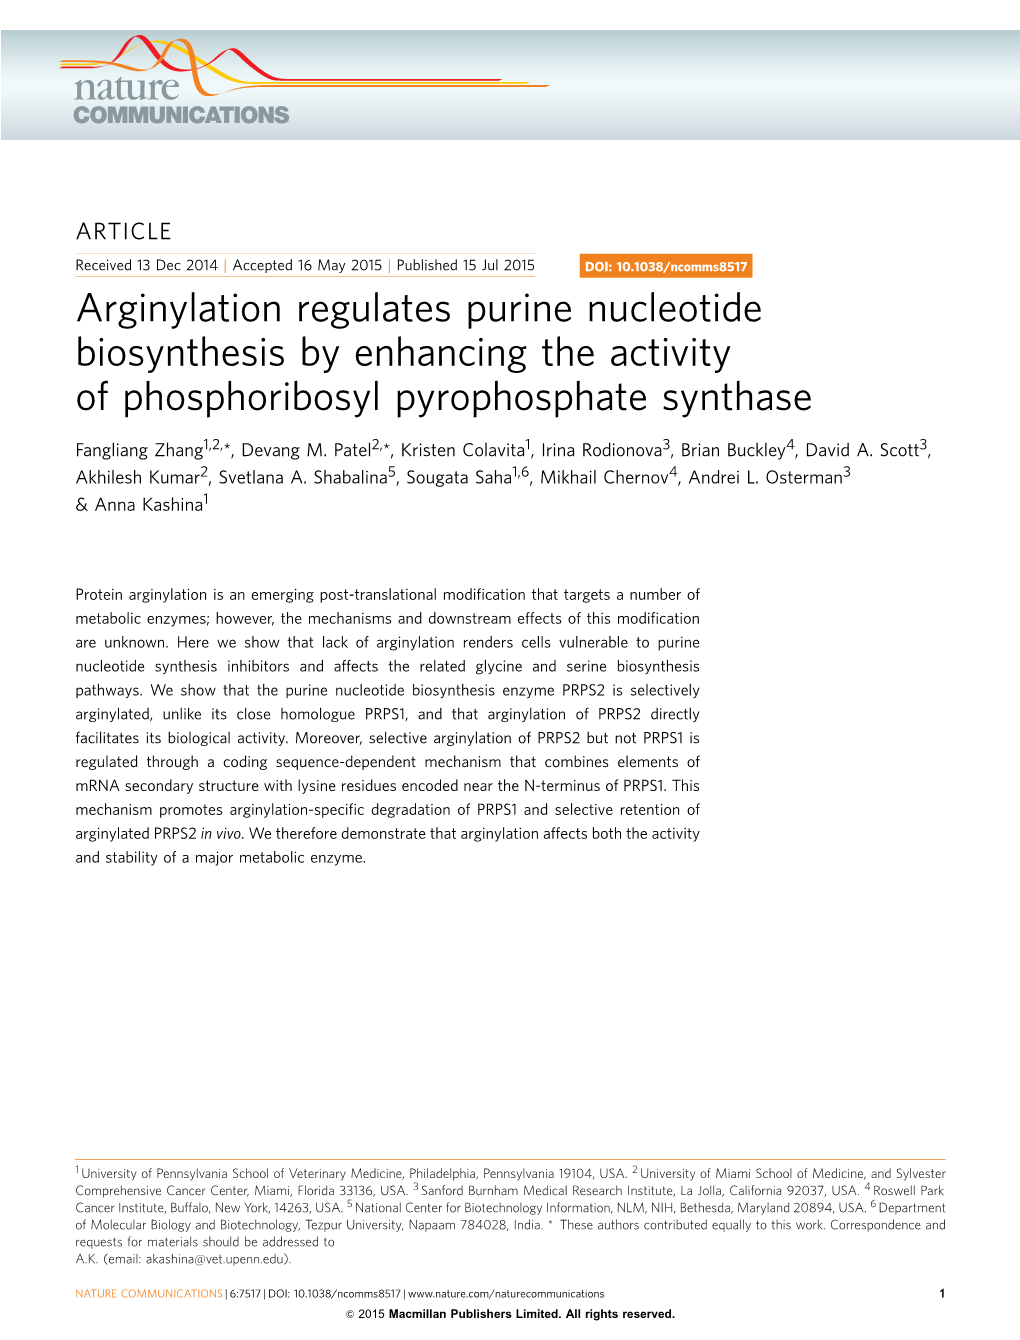 Arginylation Regulates Purine Nucleotide Biosynthesis by Enhancing the Activity of Phosphoribosyl Pyrophosphate Synthase